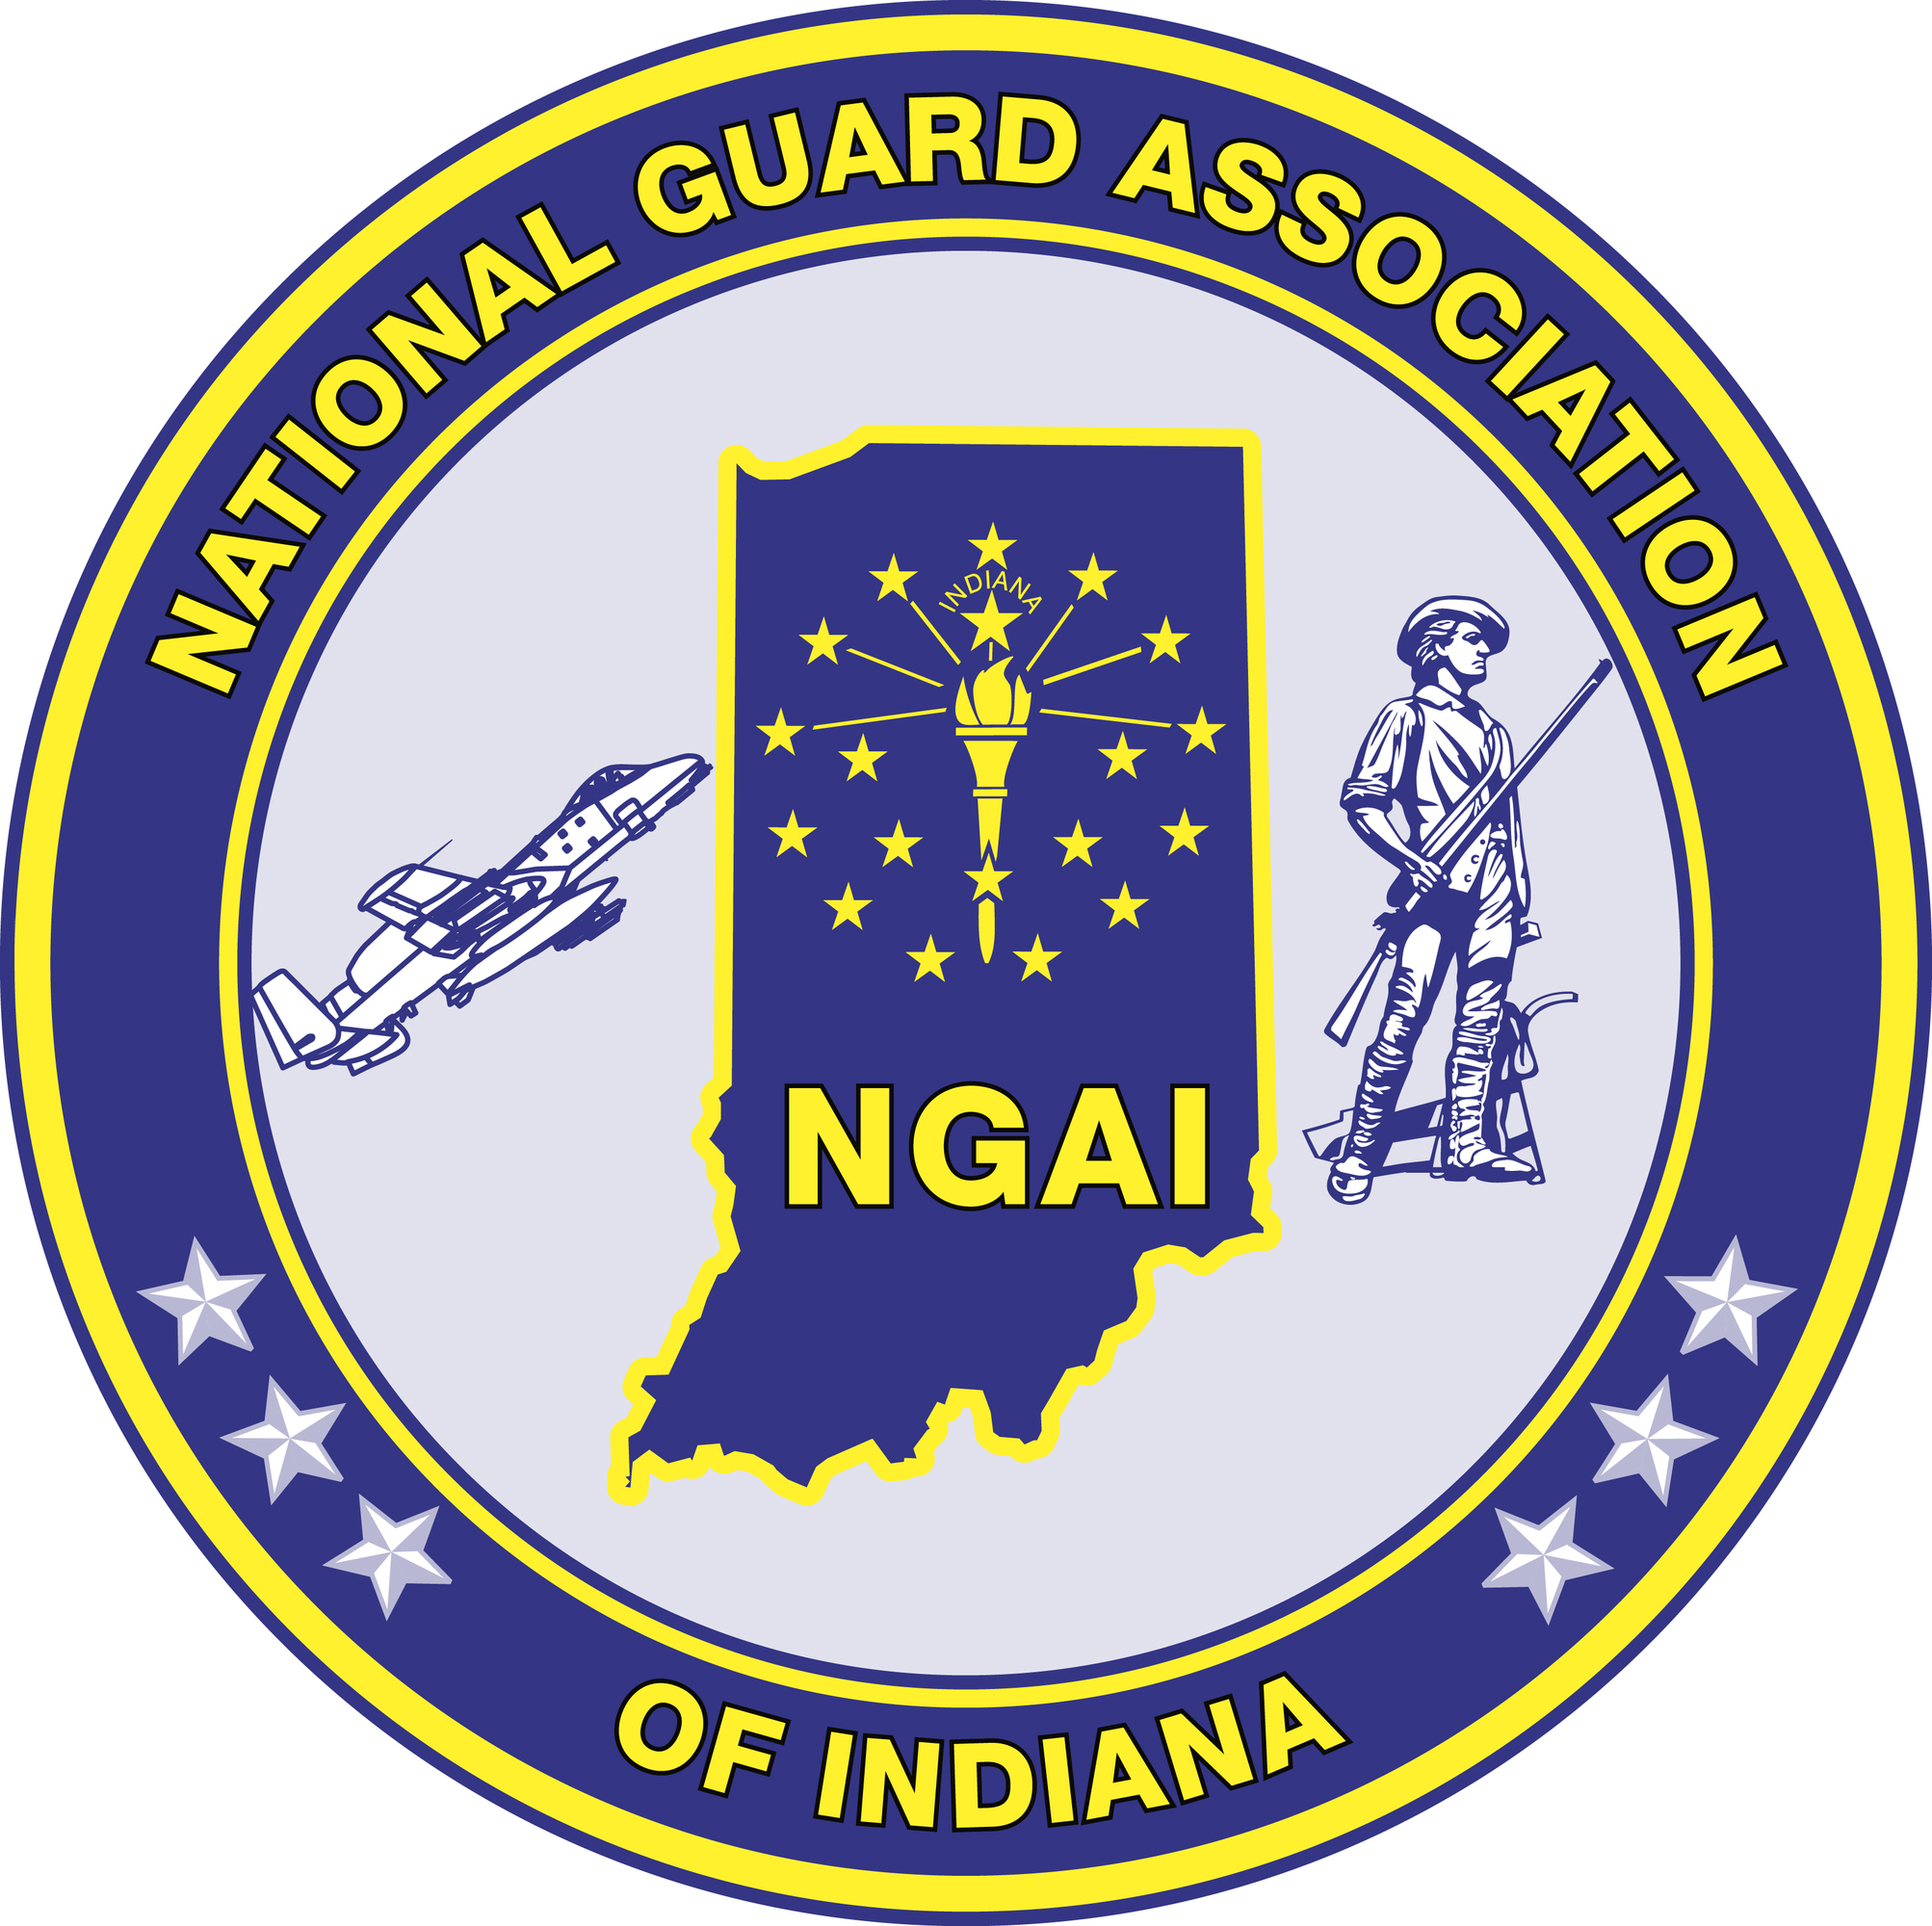 National Guard Association of Indiana